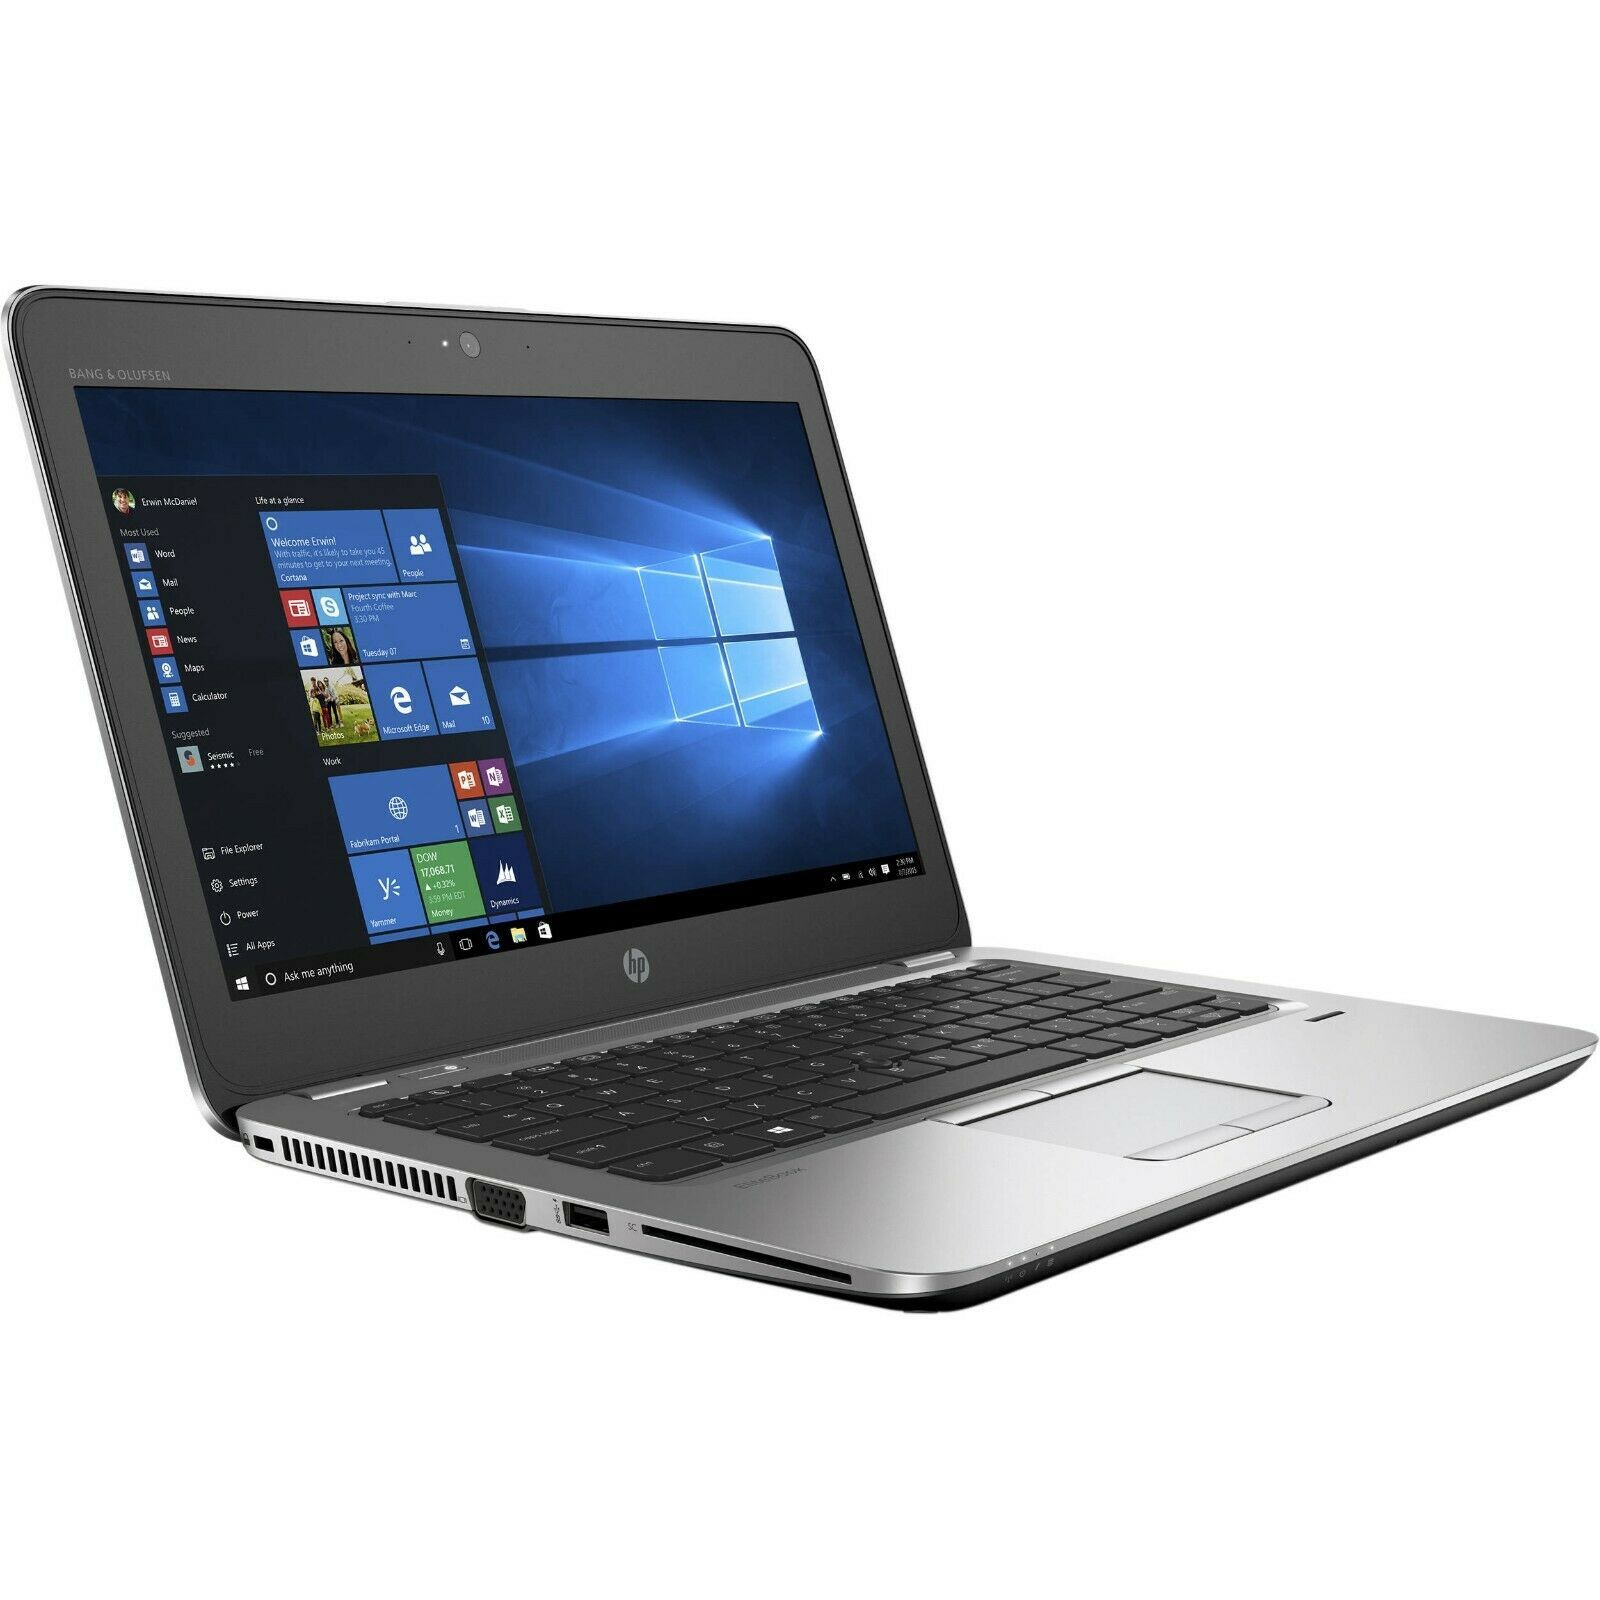 HP EliteBook 820 G3 Intel i7 6600U 2.60Ghz 4GB RAM 128GB SSD 12.5" Win 10 Image 2